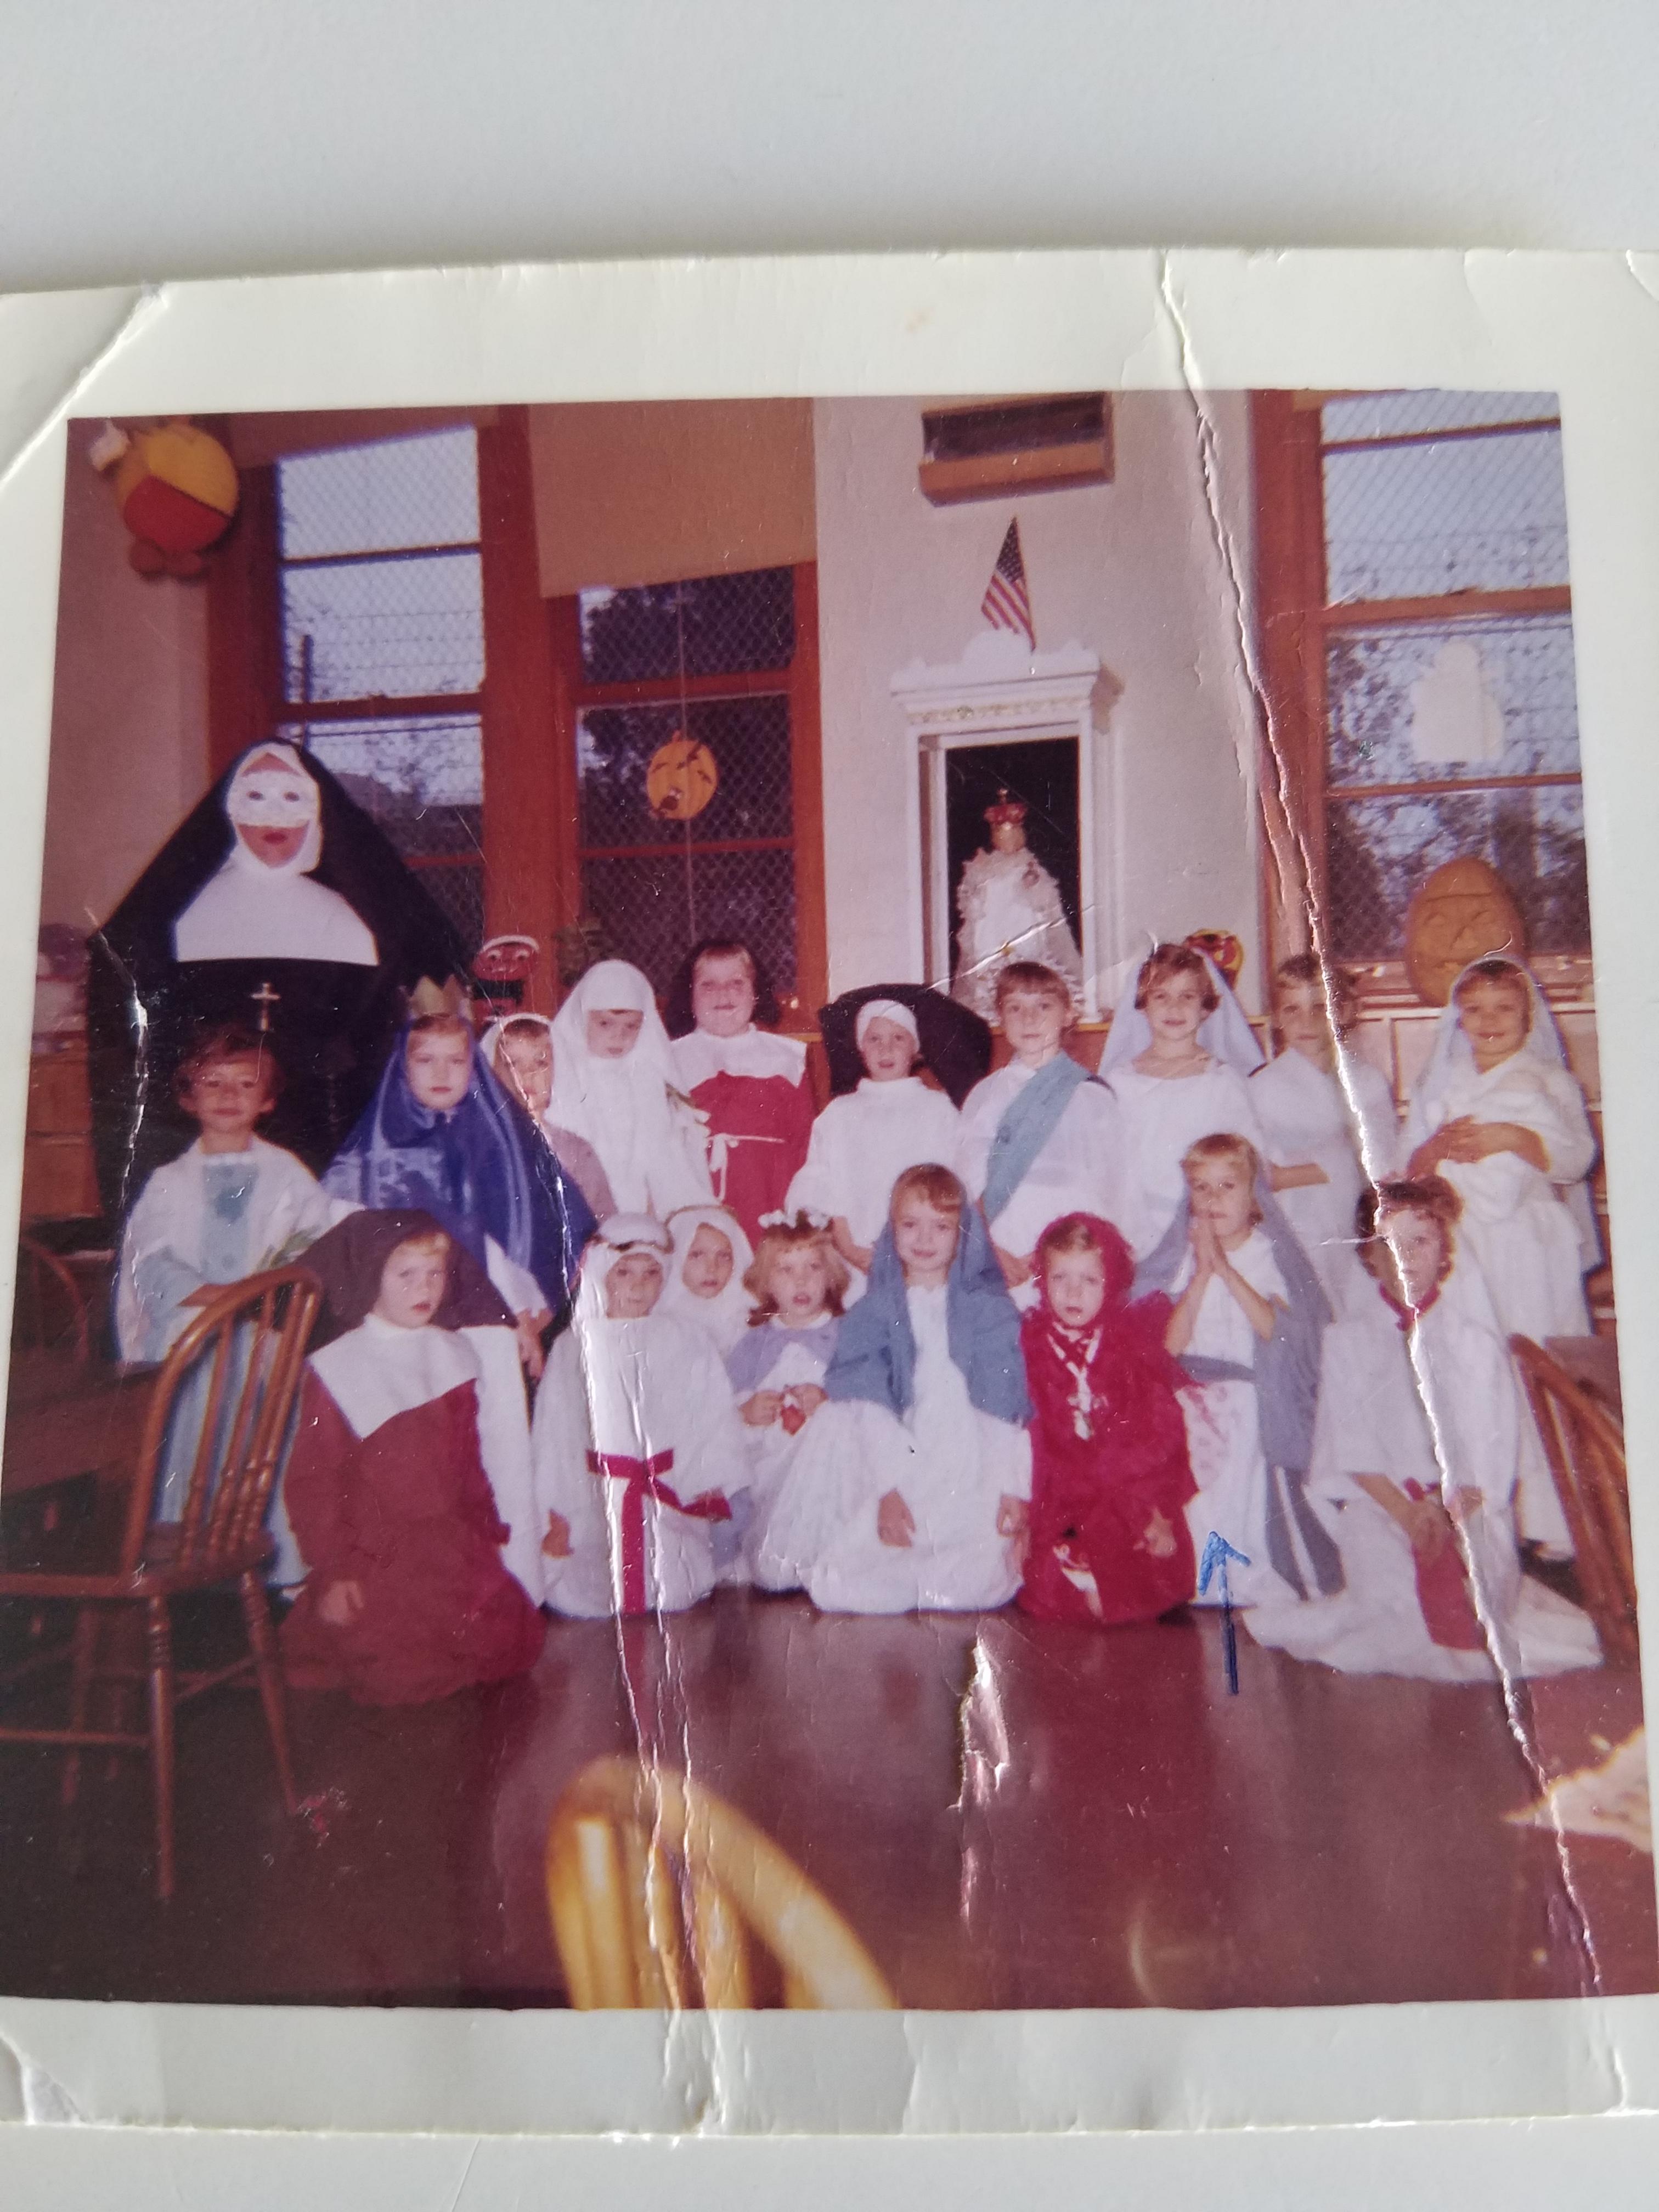 Dressed as Patron Saint for Halloween - Kindergarten